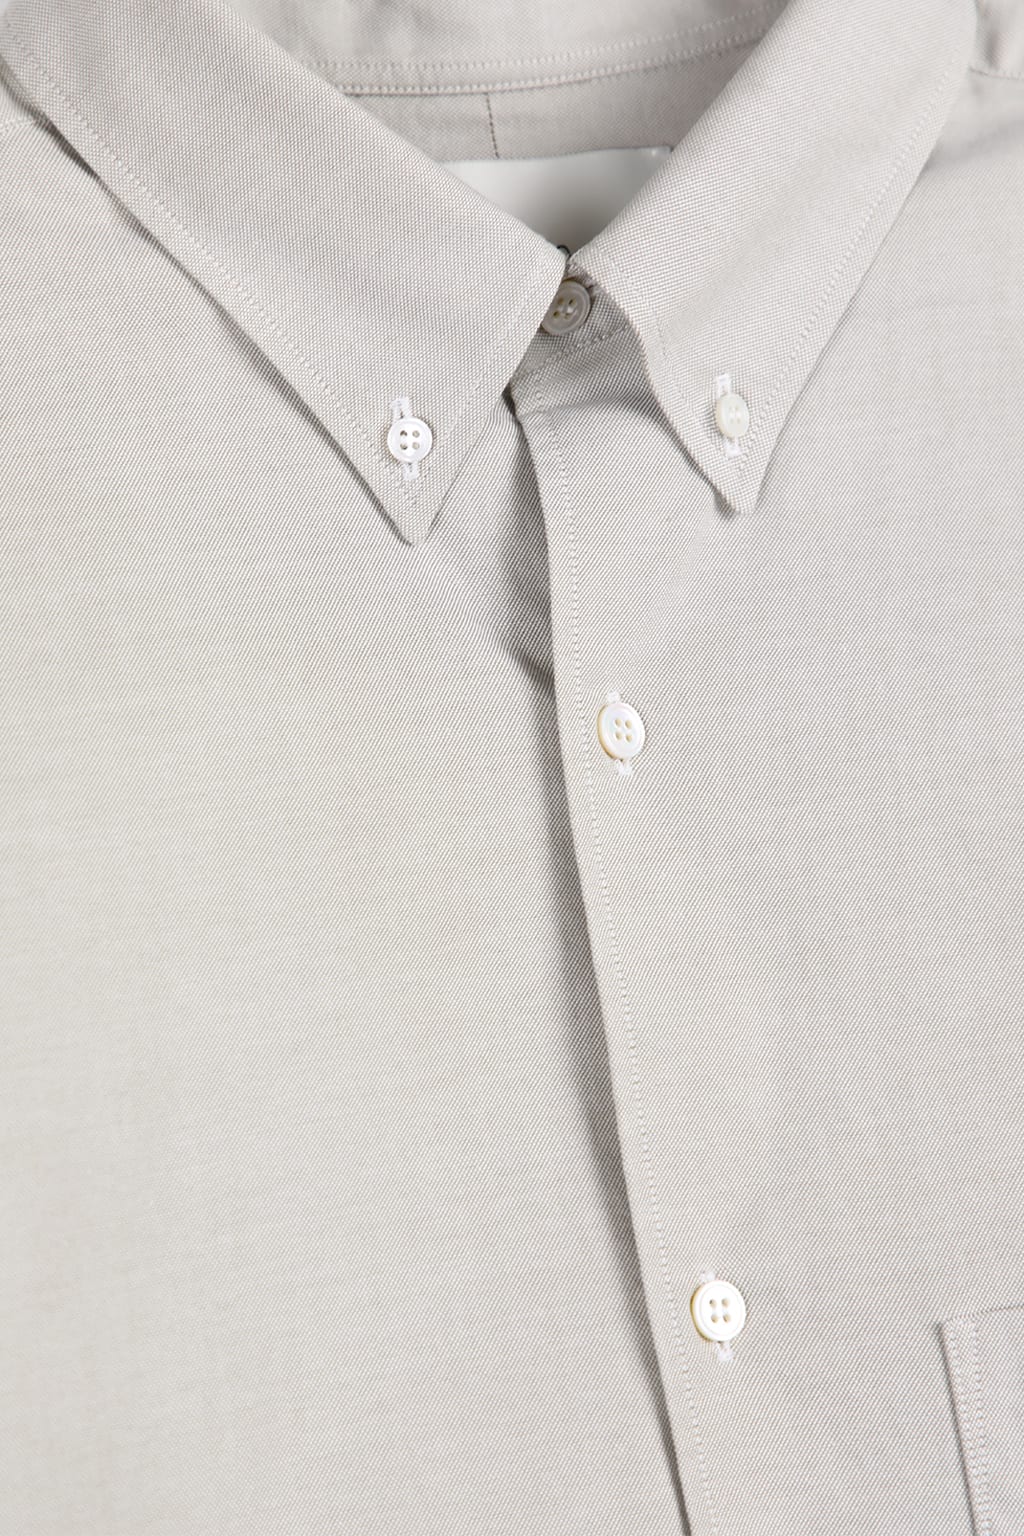 Oxford Shirt Grey cotton oxford shirt - Keble